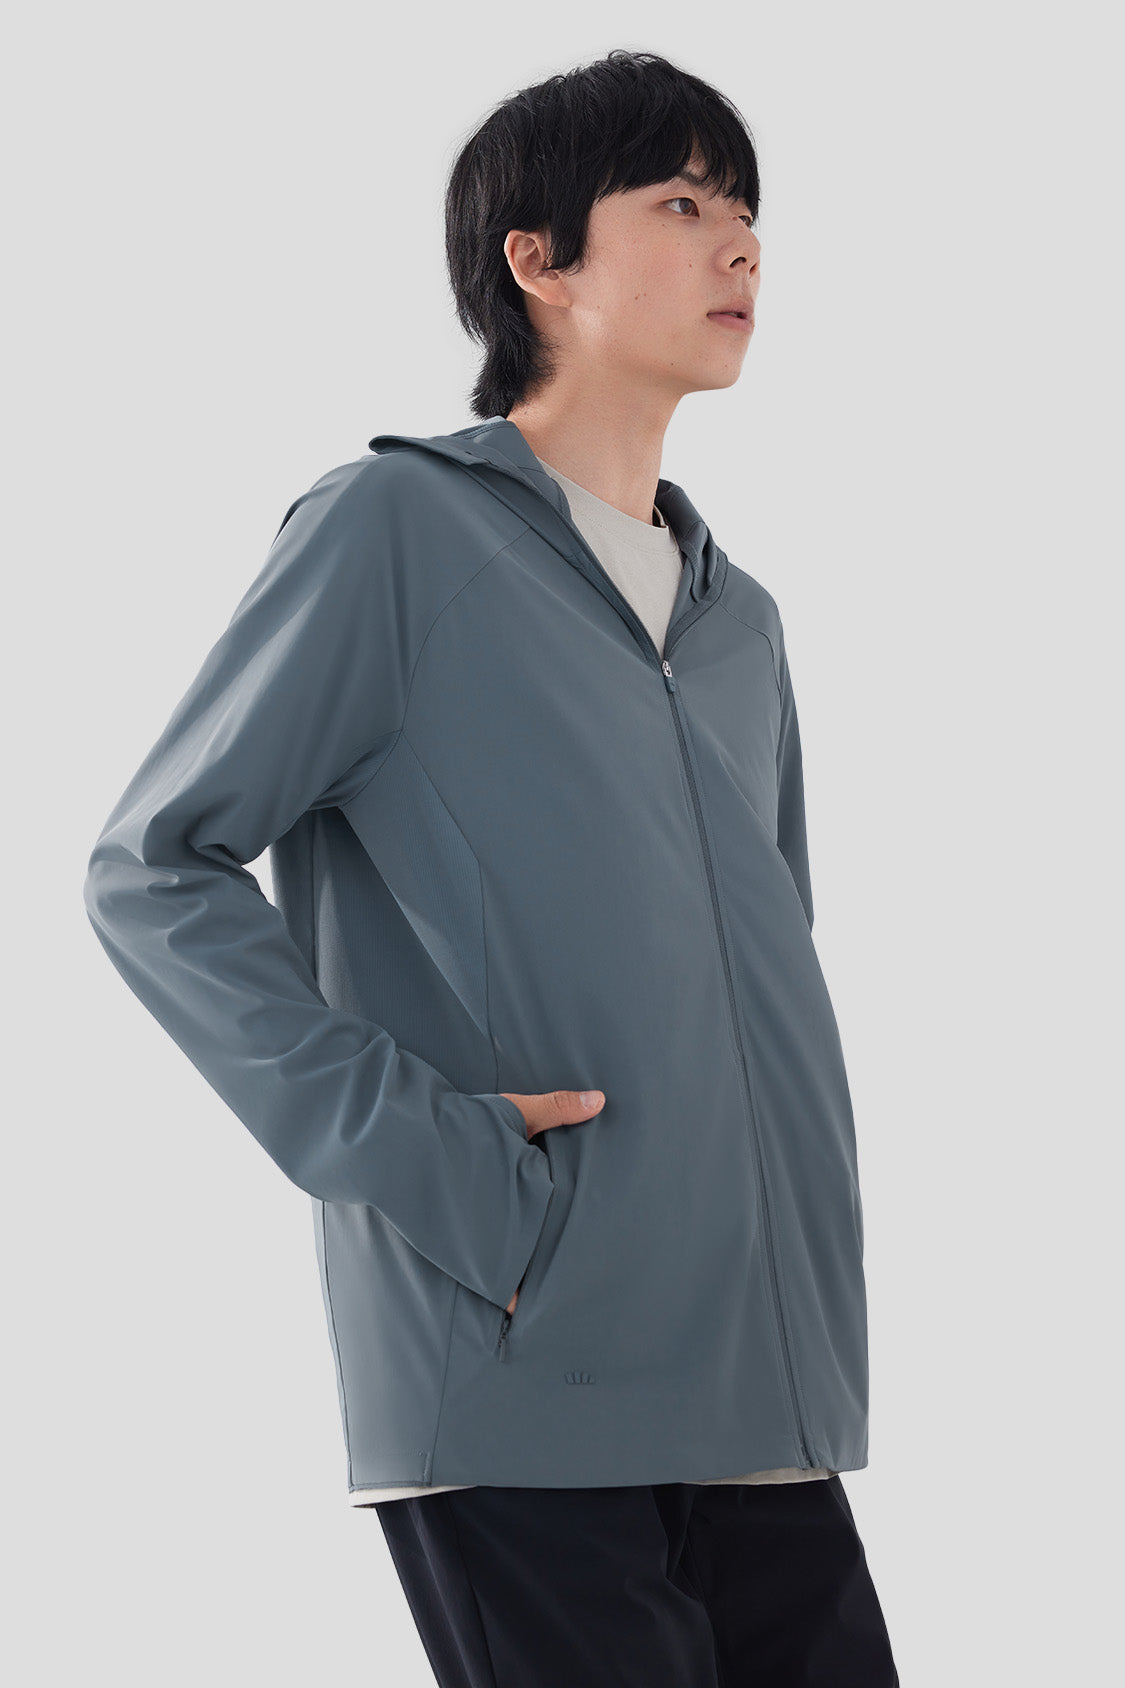 beneunder mens sun protection jacket upf50+ #color_deep blue gray